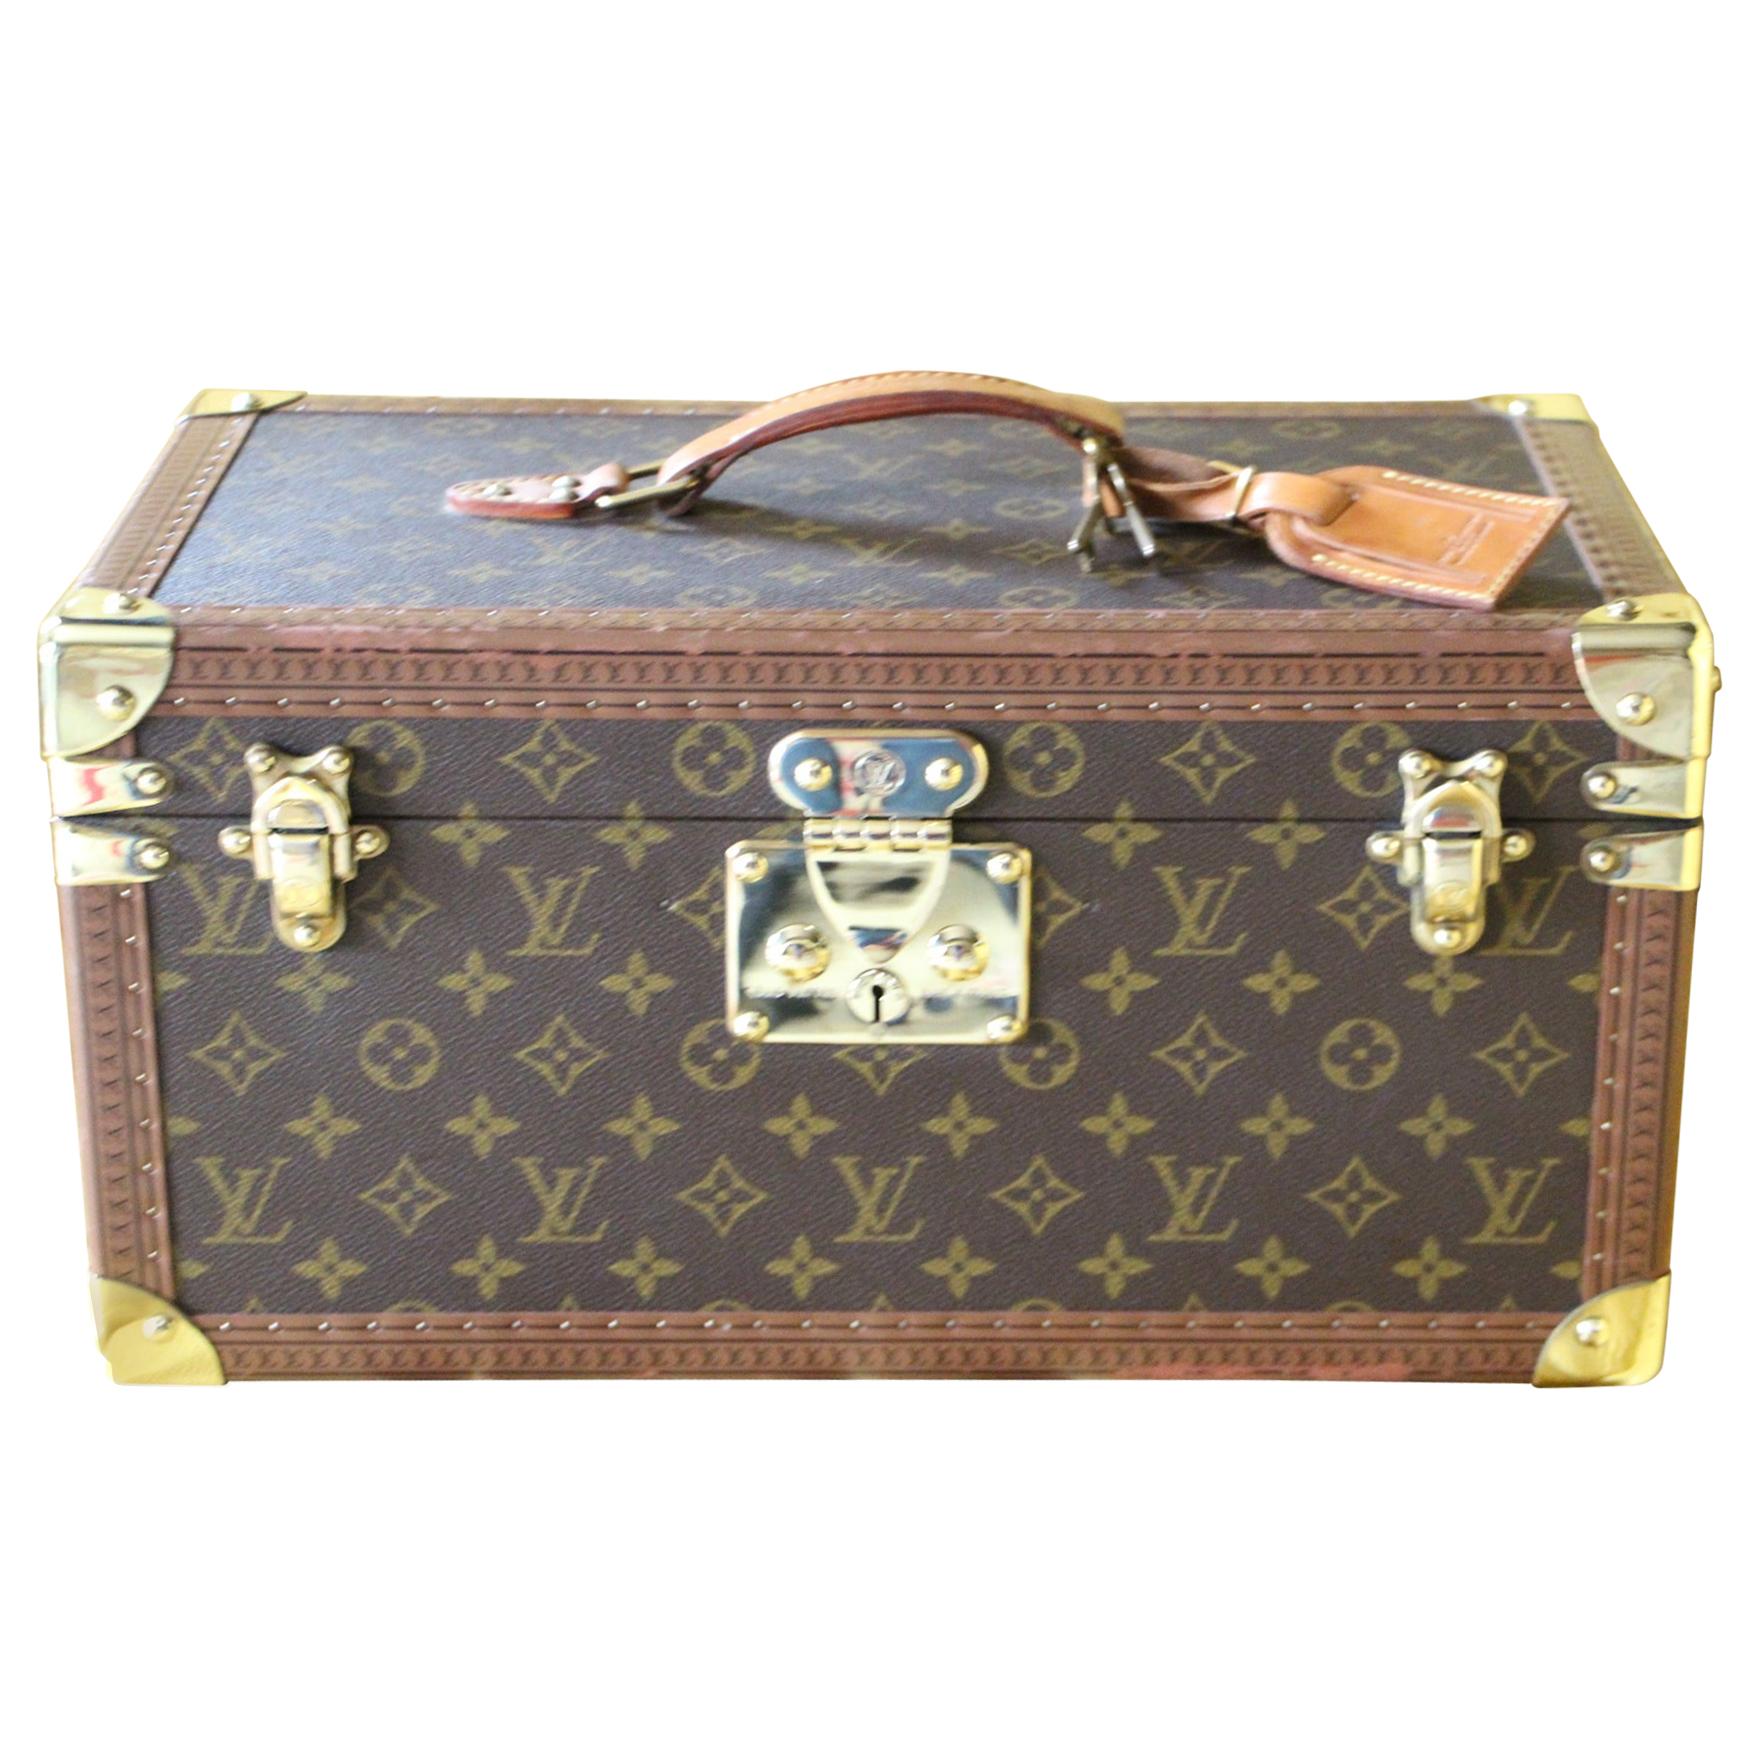 Louis Vuitton Train Case, Louis Vuitton Jewelry Case, Louis Vuitton Beauty Case